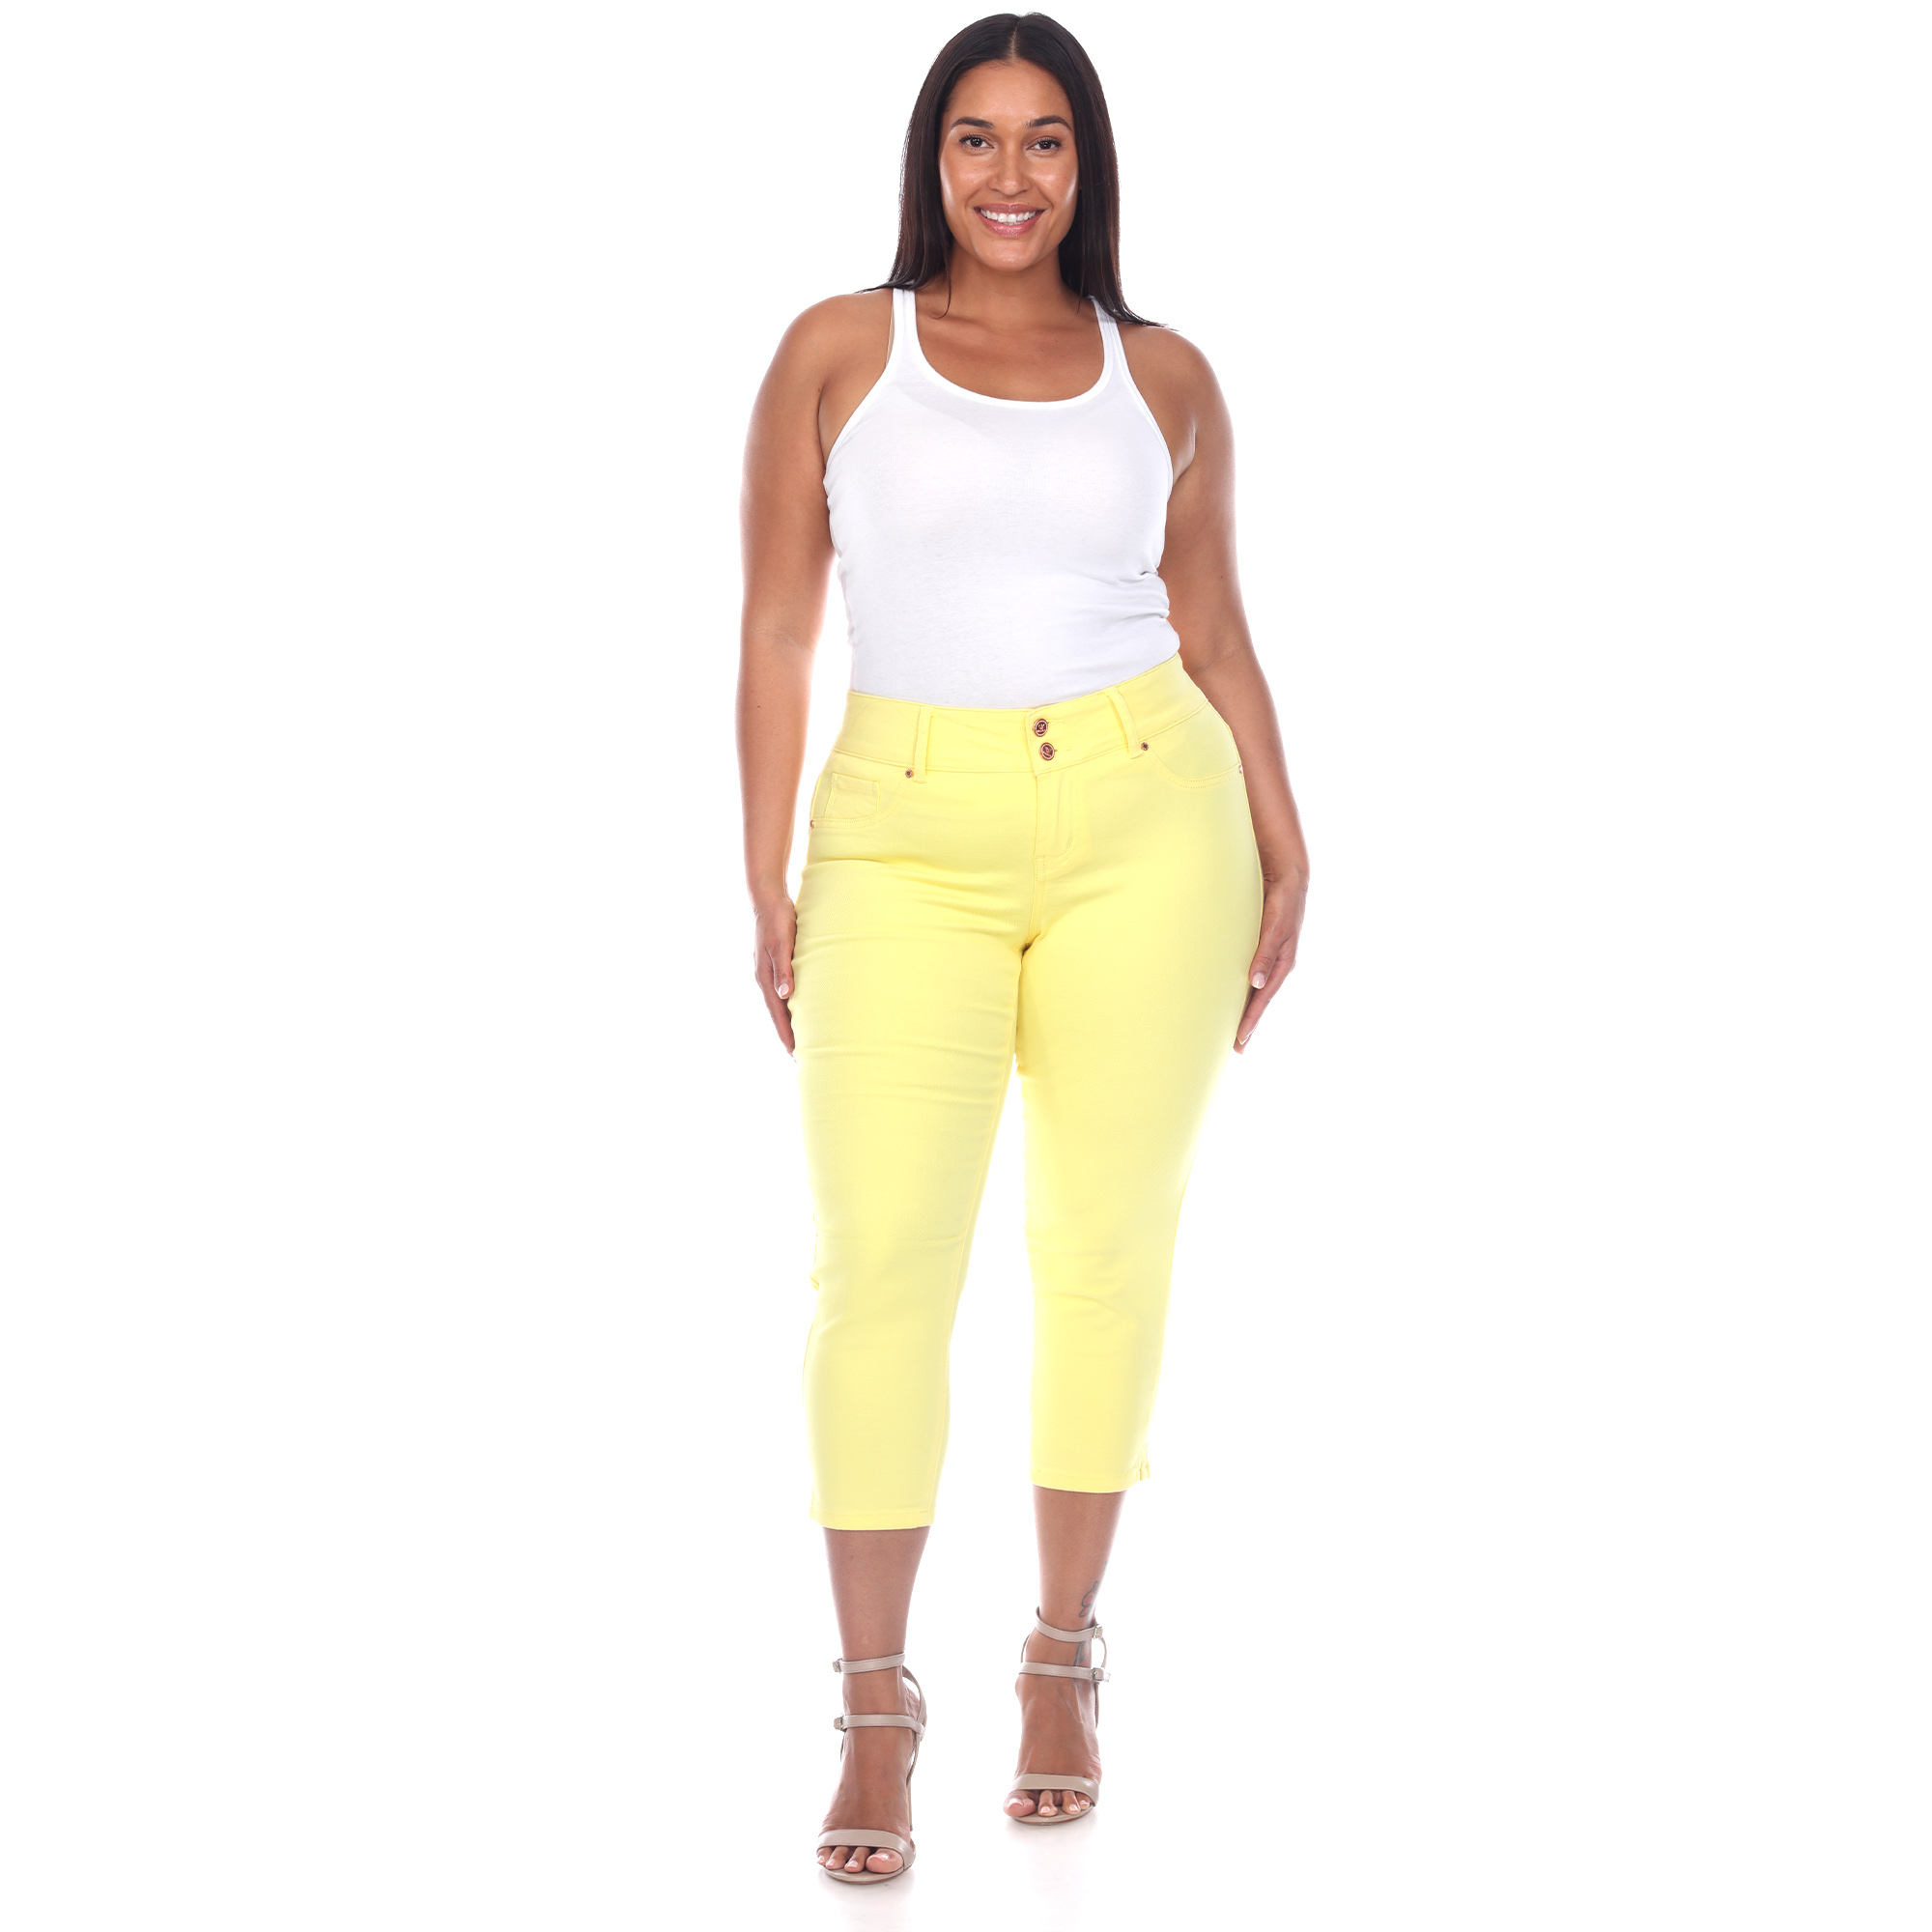 White Mark Womenâs Capri Jeans - Yellow, 22